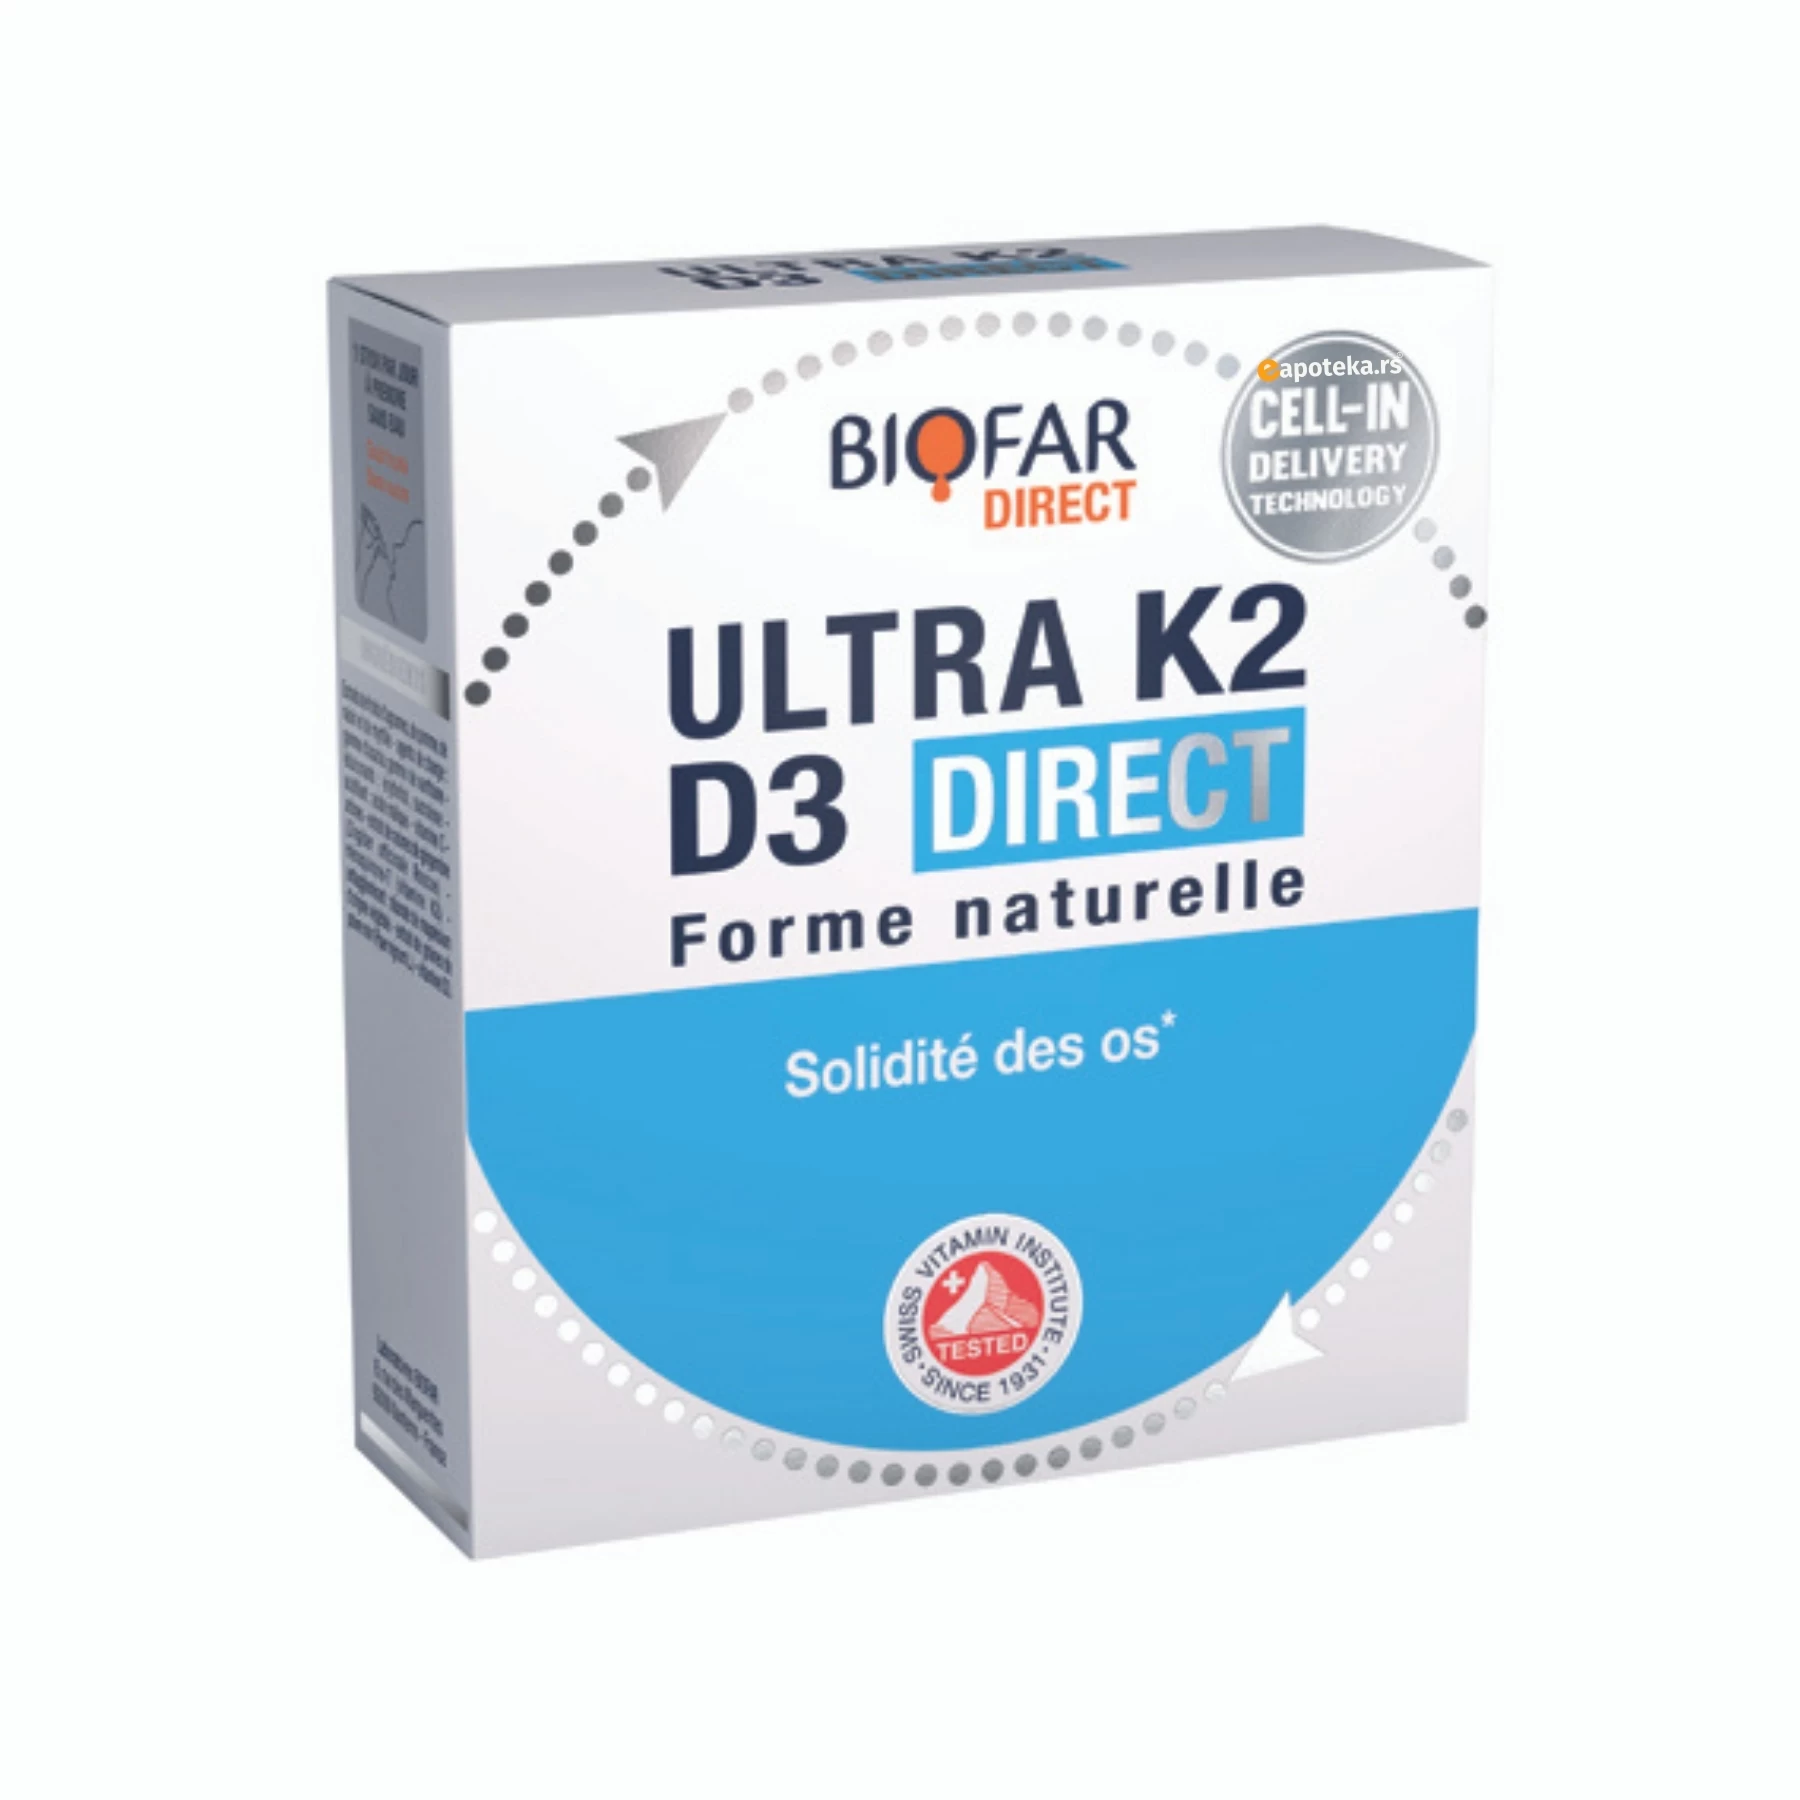 BIOFAR Direct ULTRA K2 D3, 14 Kesica